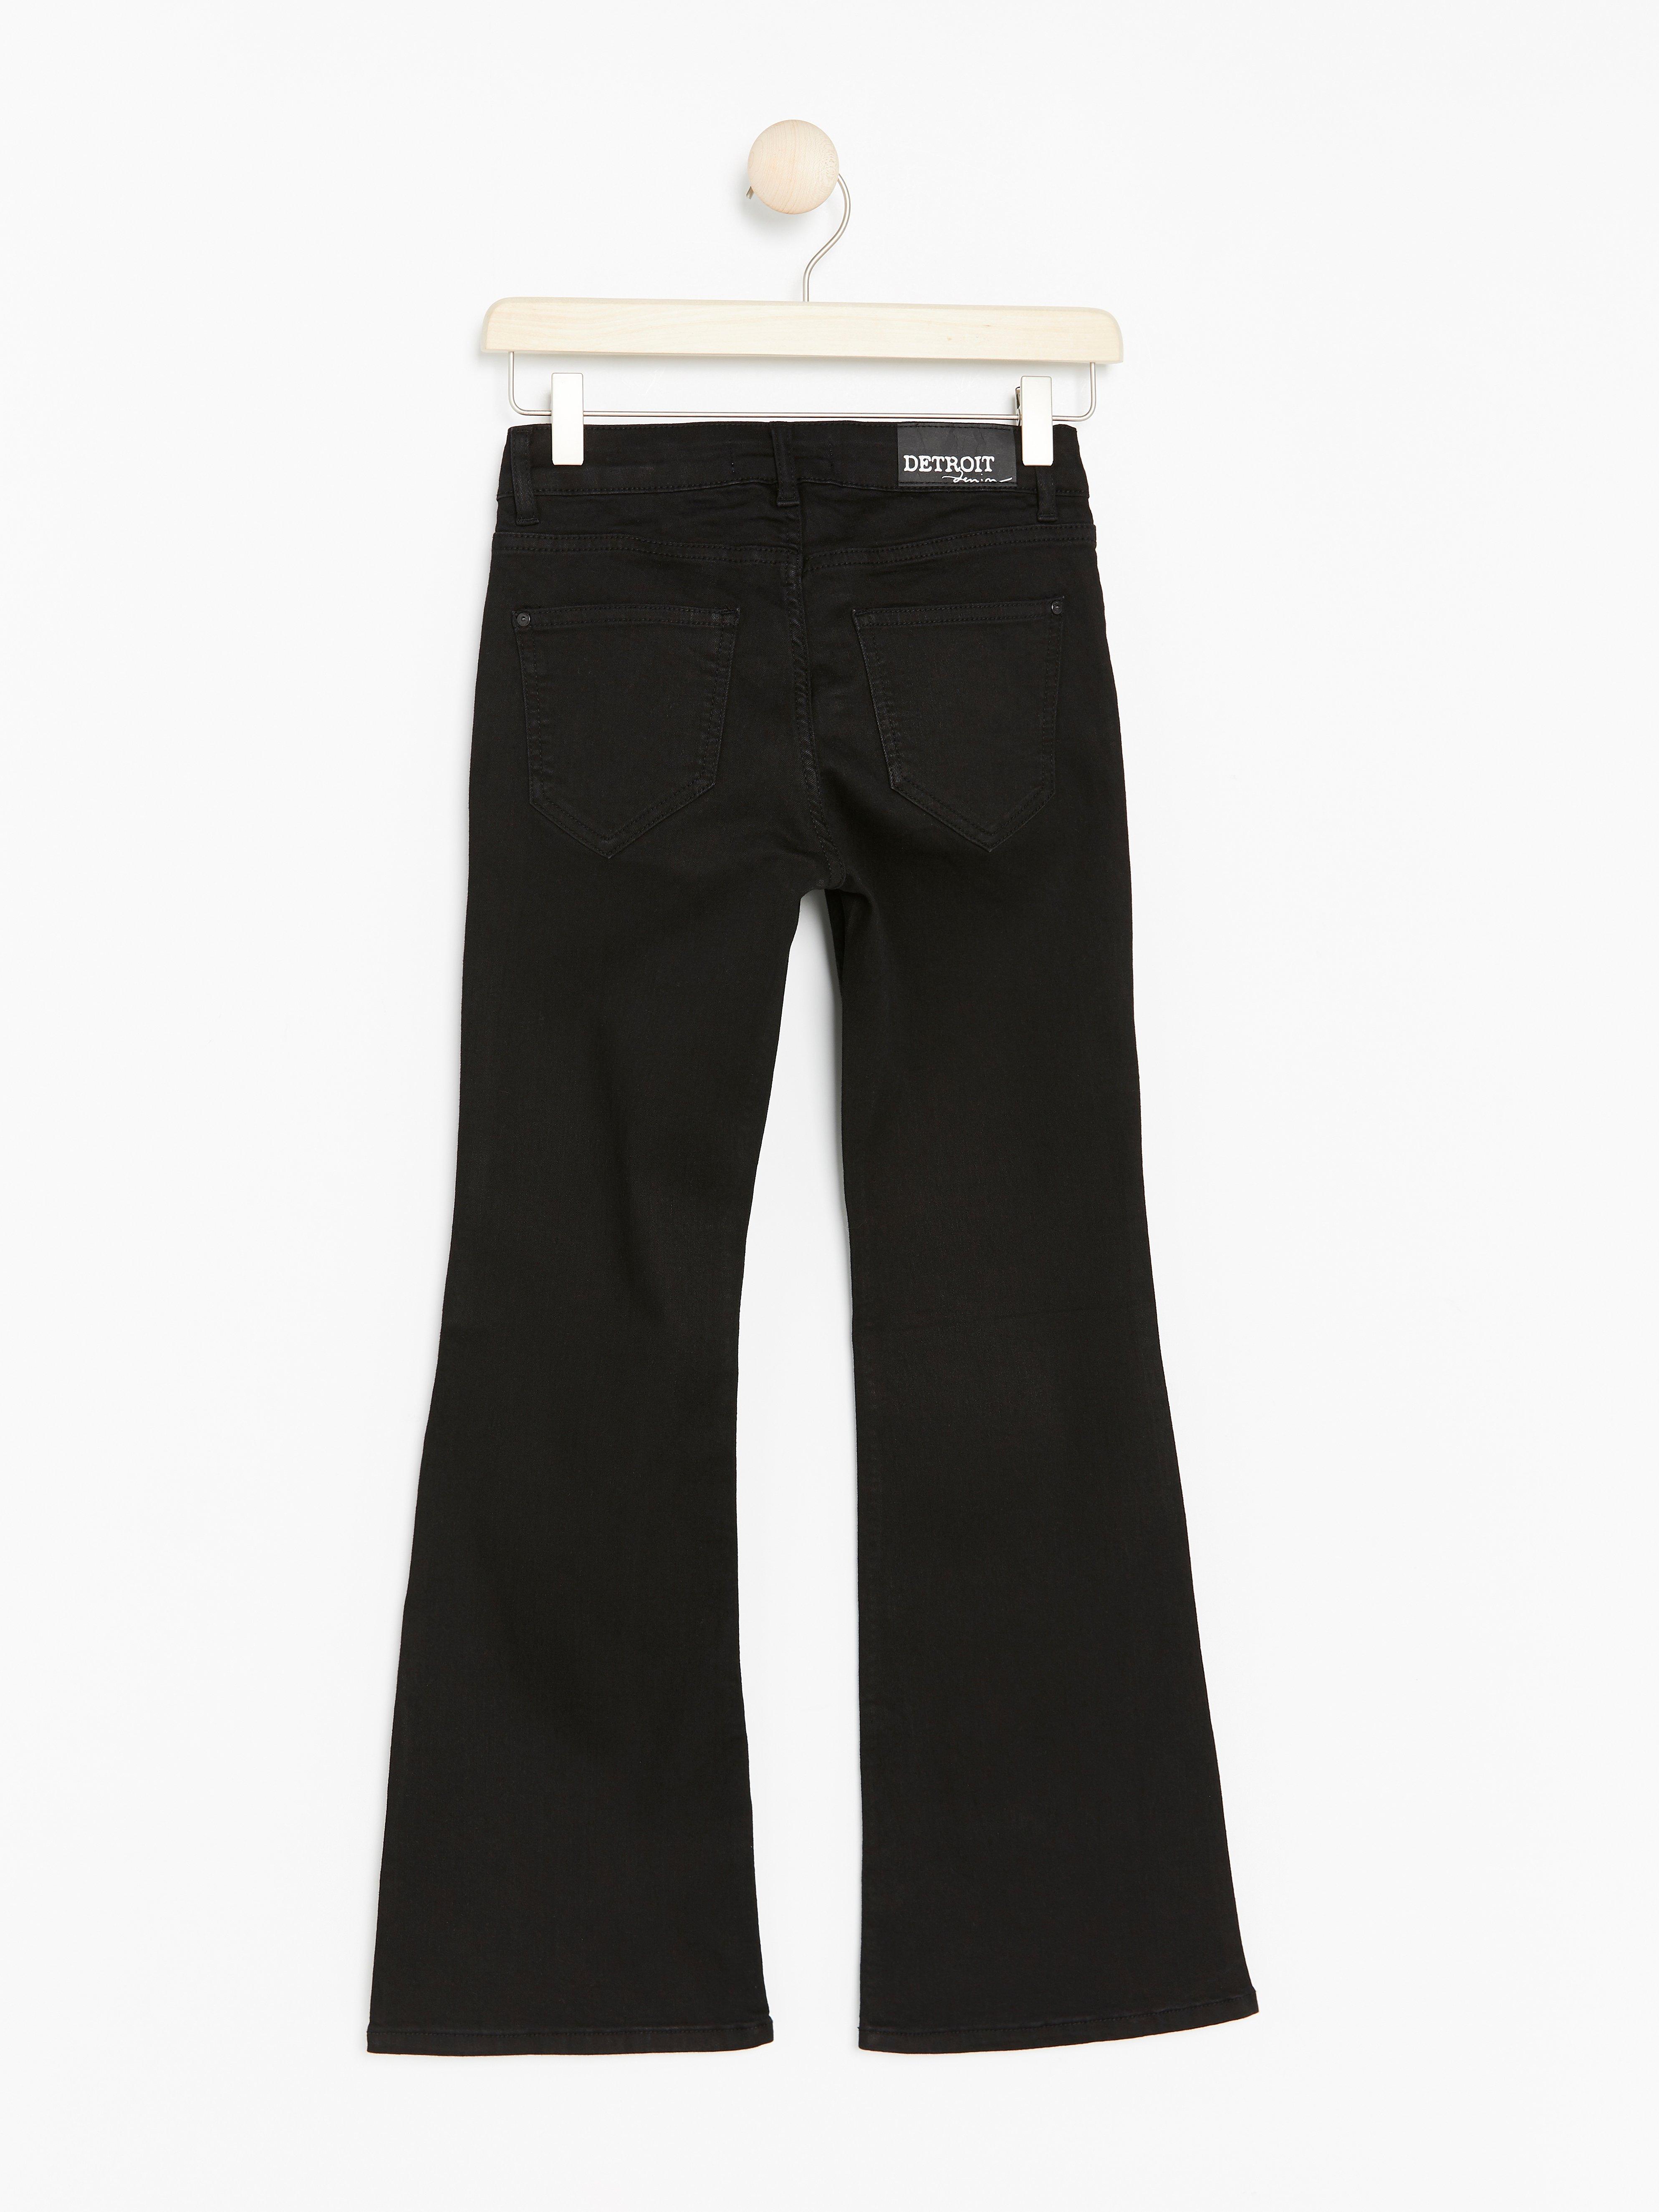 black slim bootcut jeans womens